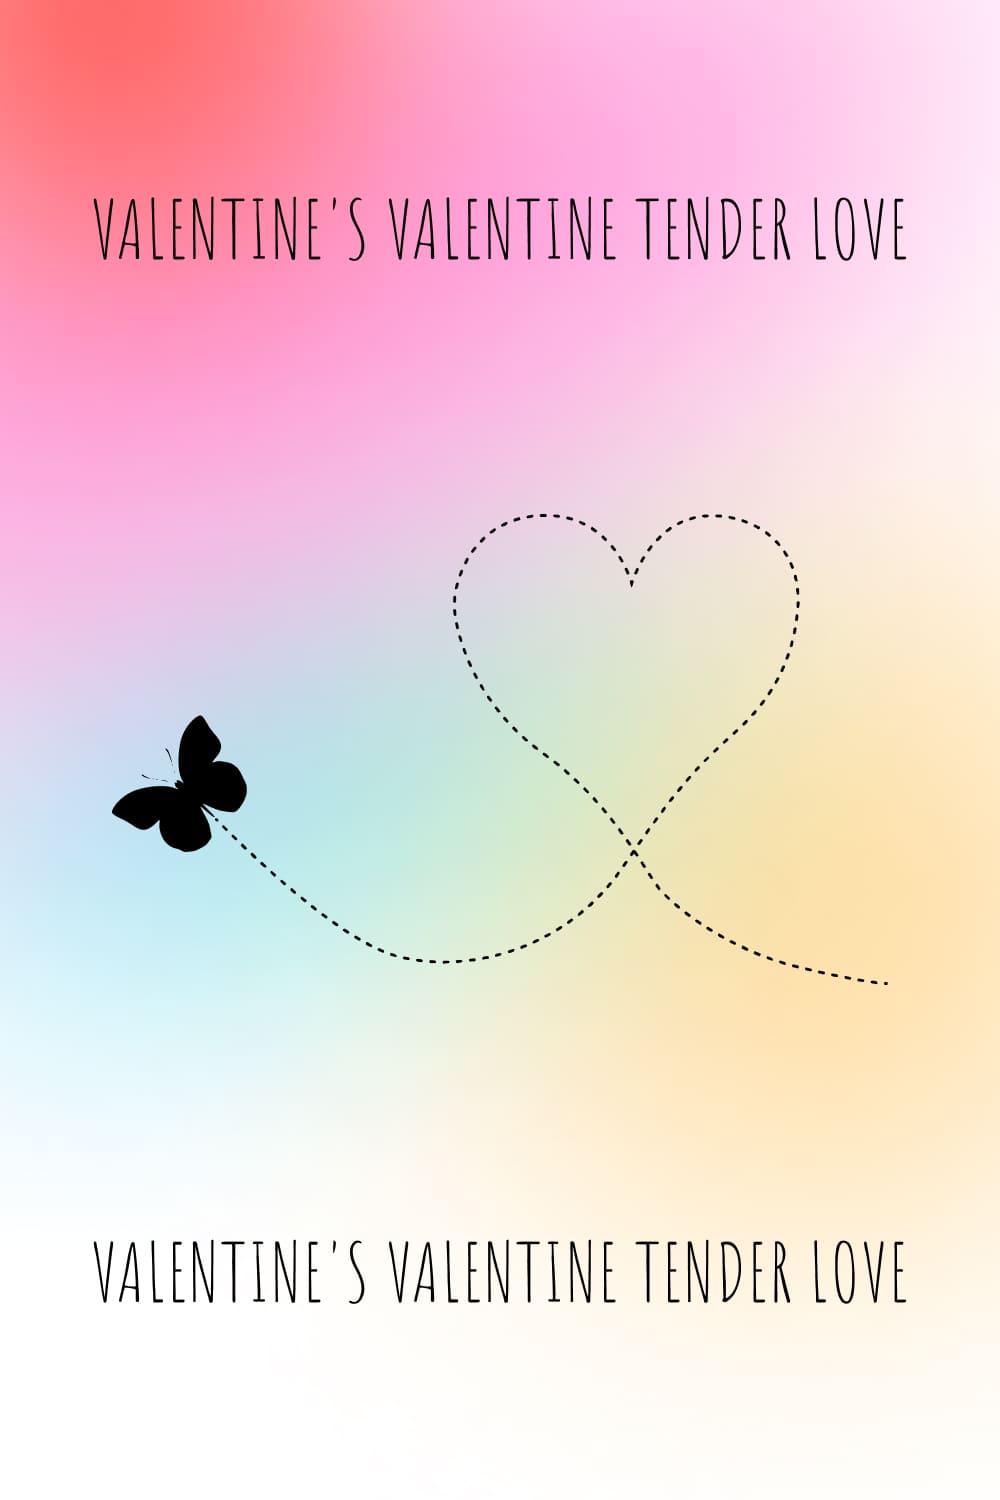 Valentines Valentine Tender Love - Pinterest Image.